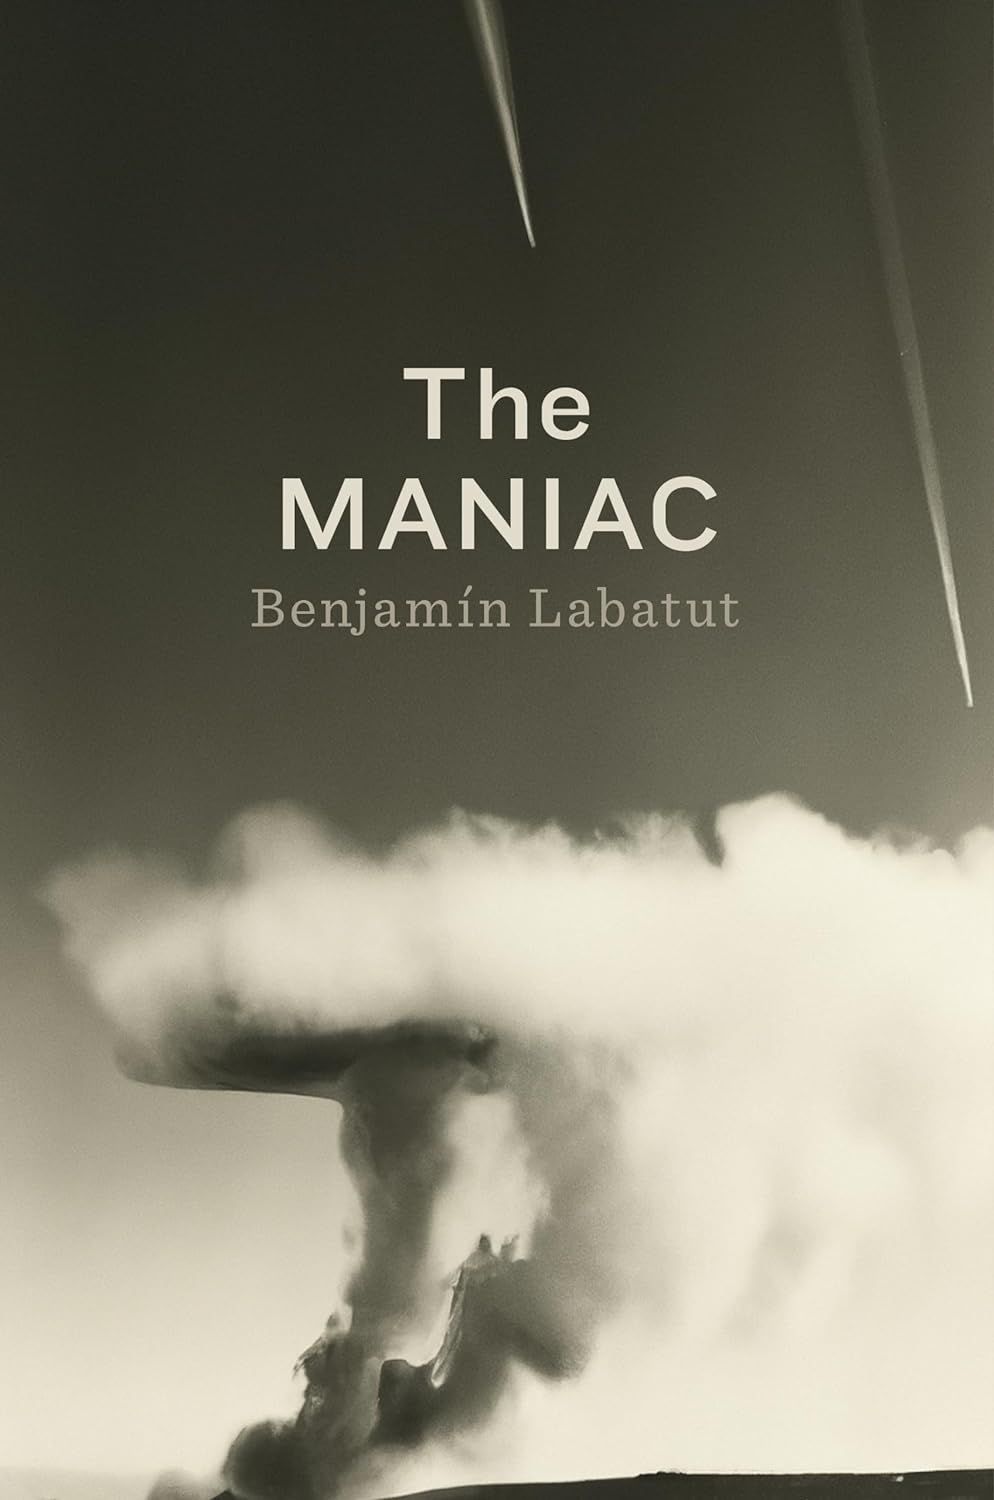 Nightmares of Reason: On Benjamín Labatut’s “The MANIAC”